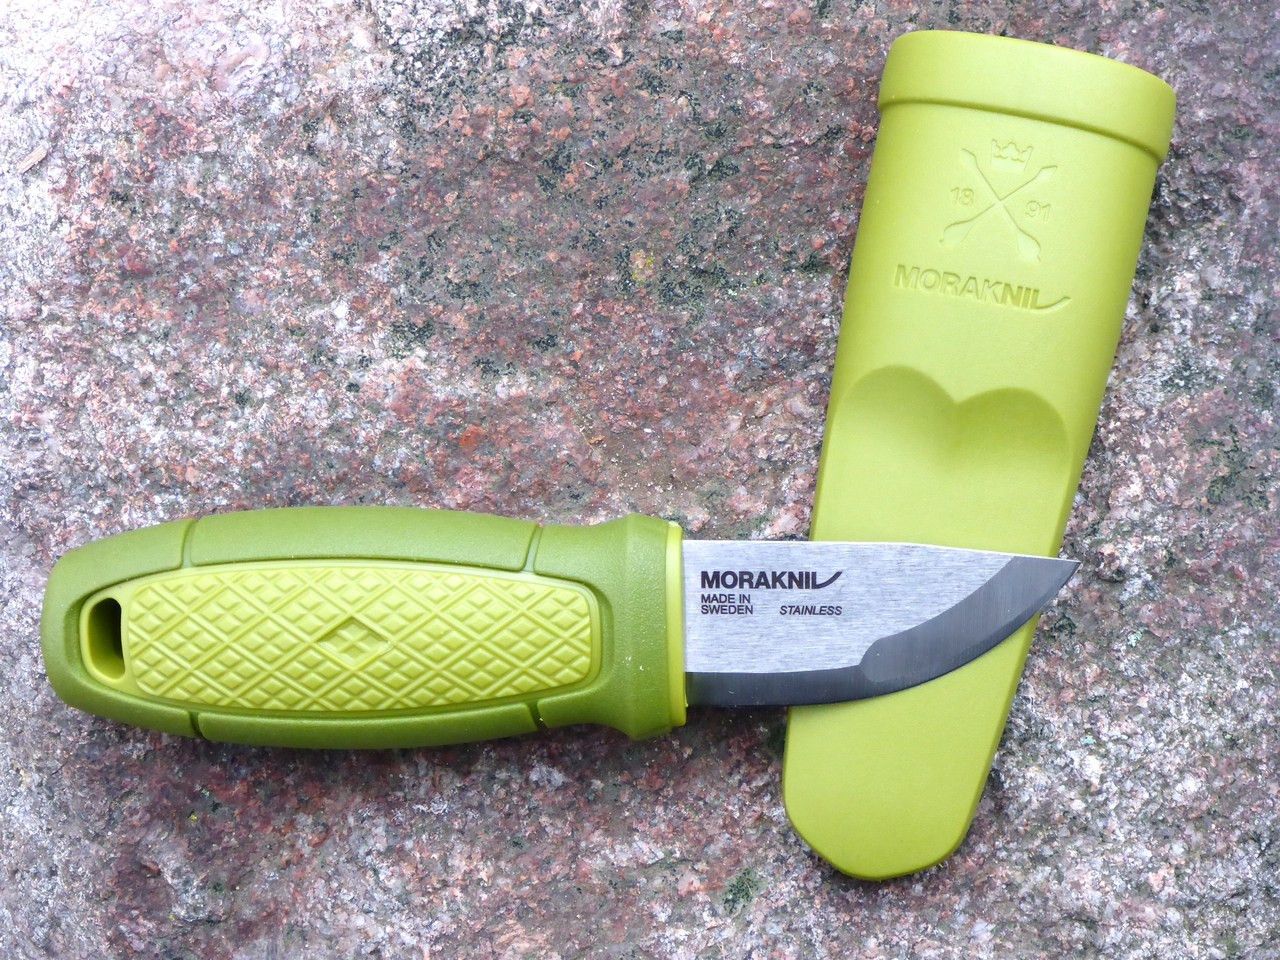 Mora Eldris Knife Green - Bens Outdoor Products